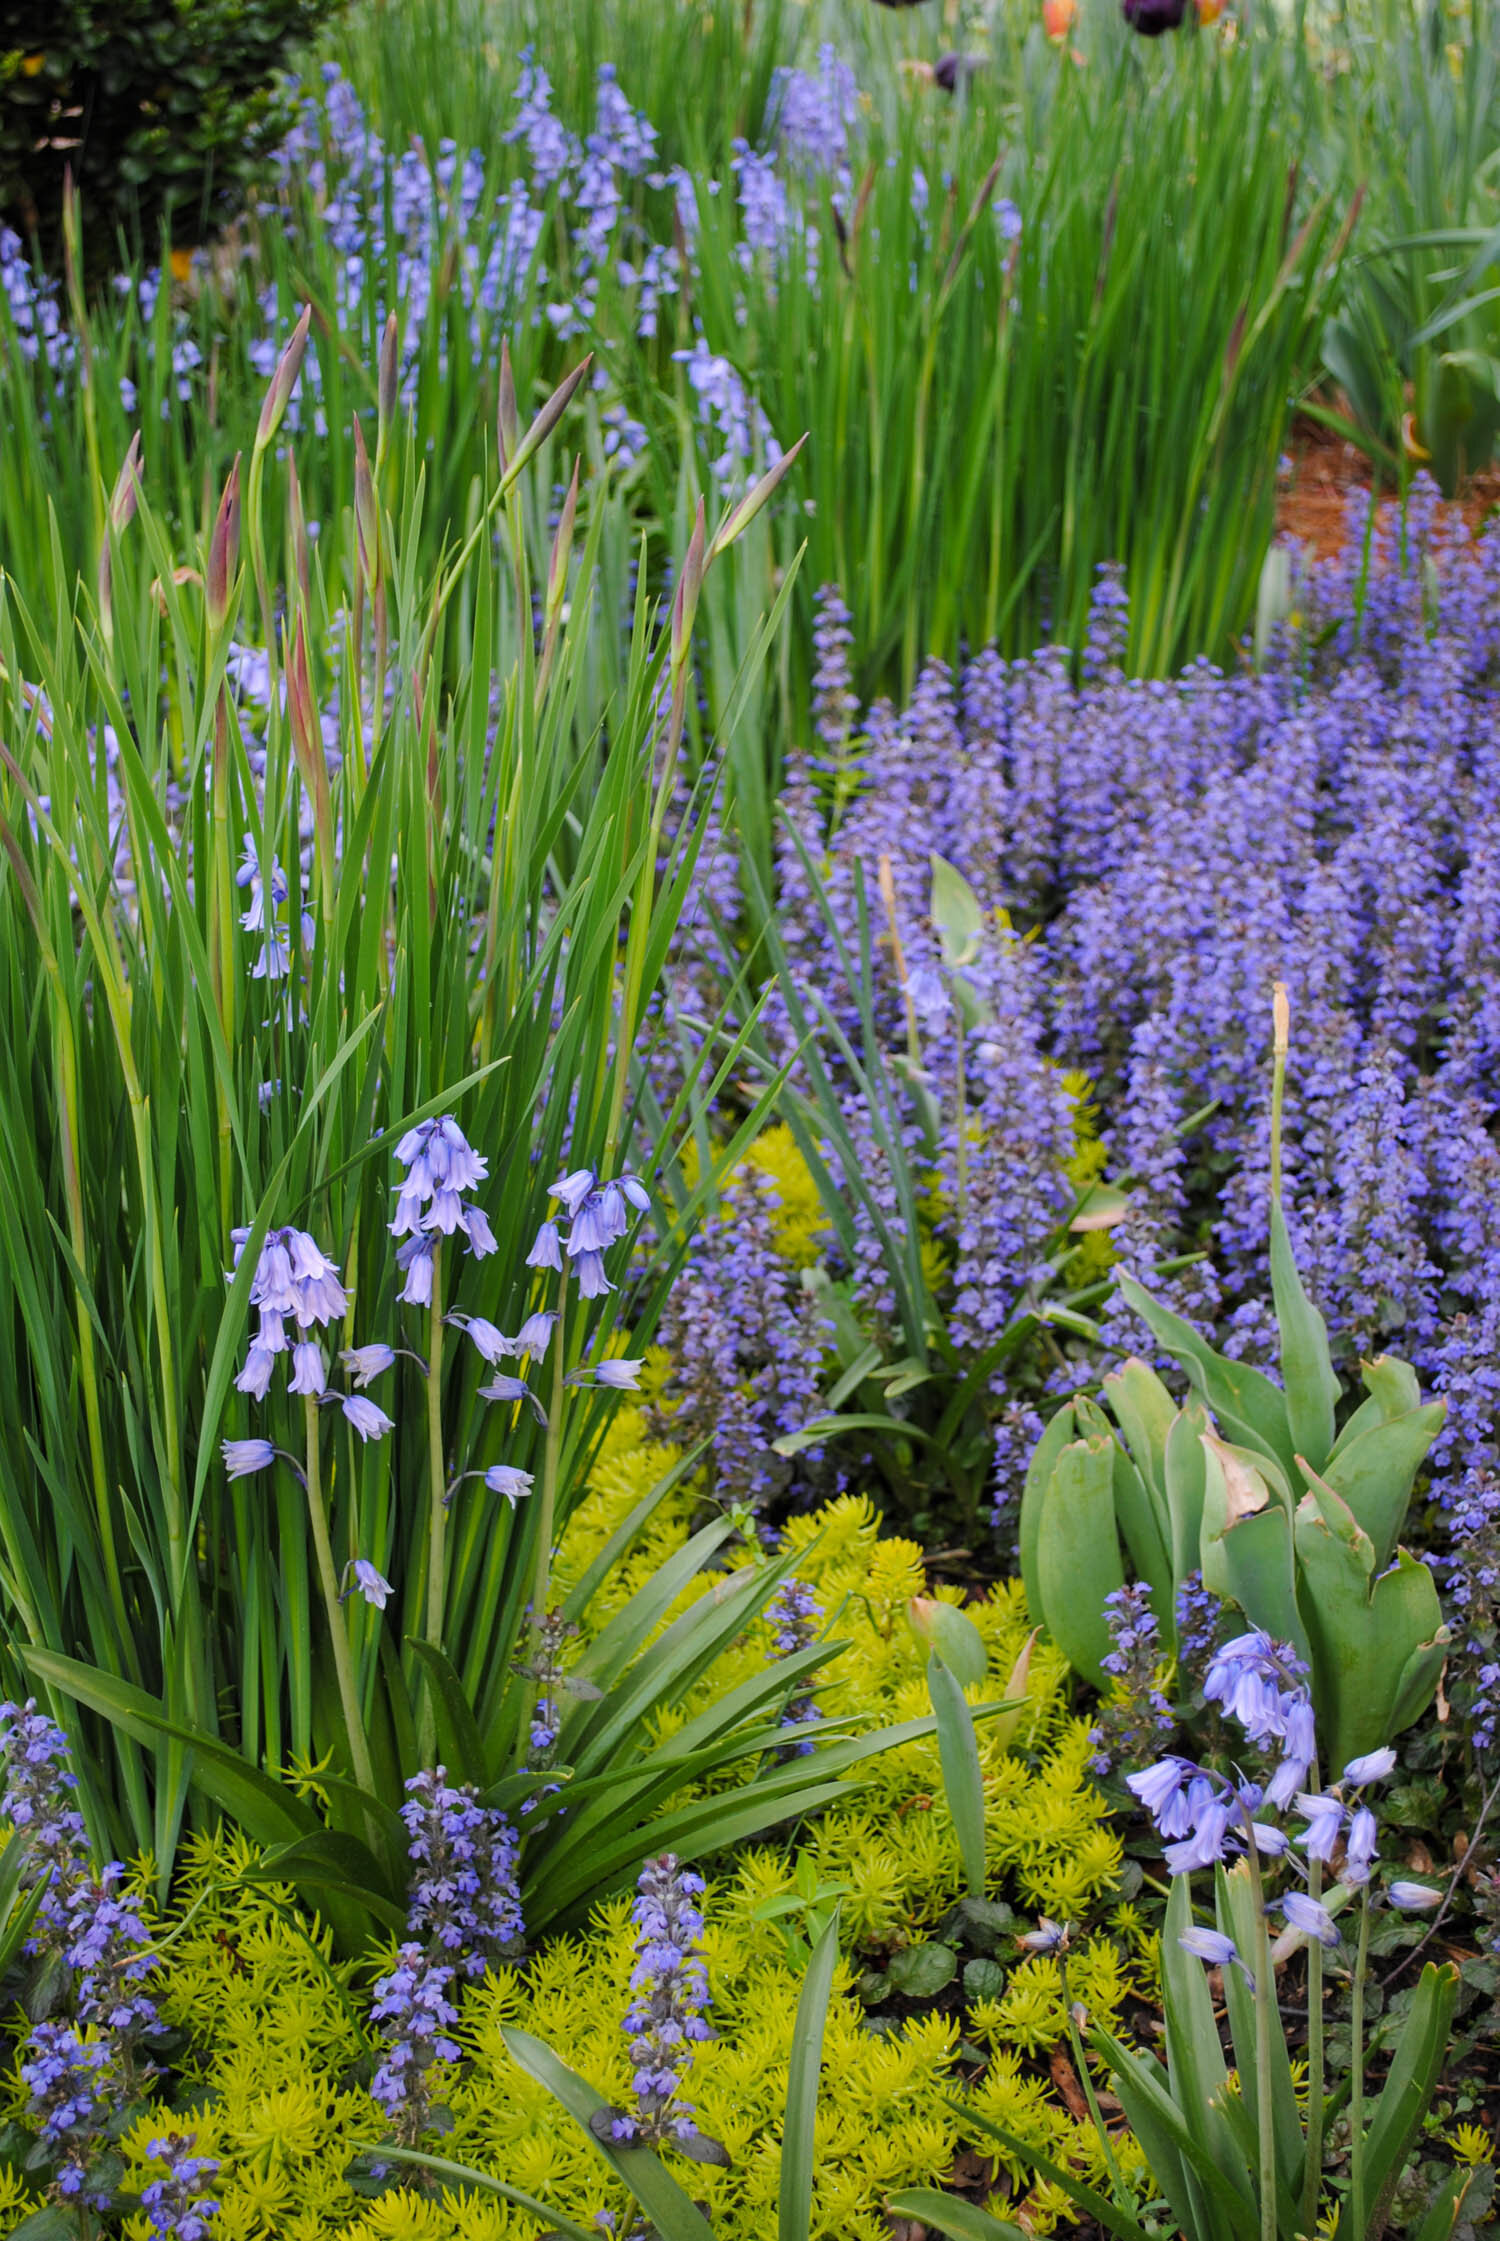 Details about   Rare Garden Columbine Aquilegia Mixed Color Perennial Flowers 100 Seeds Spring 